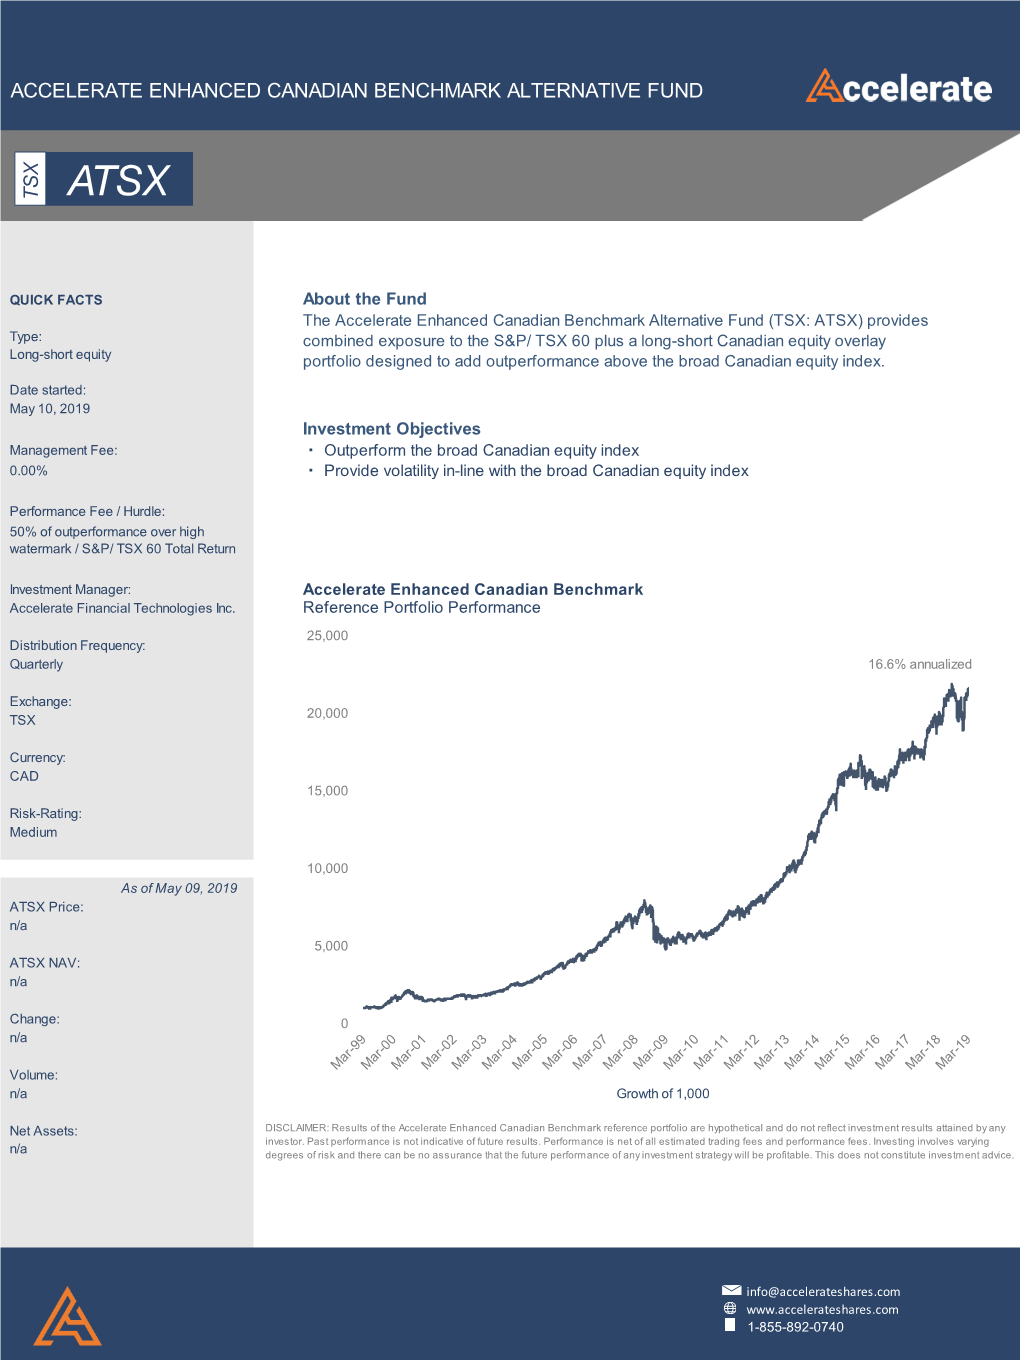 ATSX Fund Facts 05.09.19